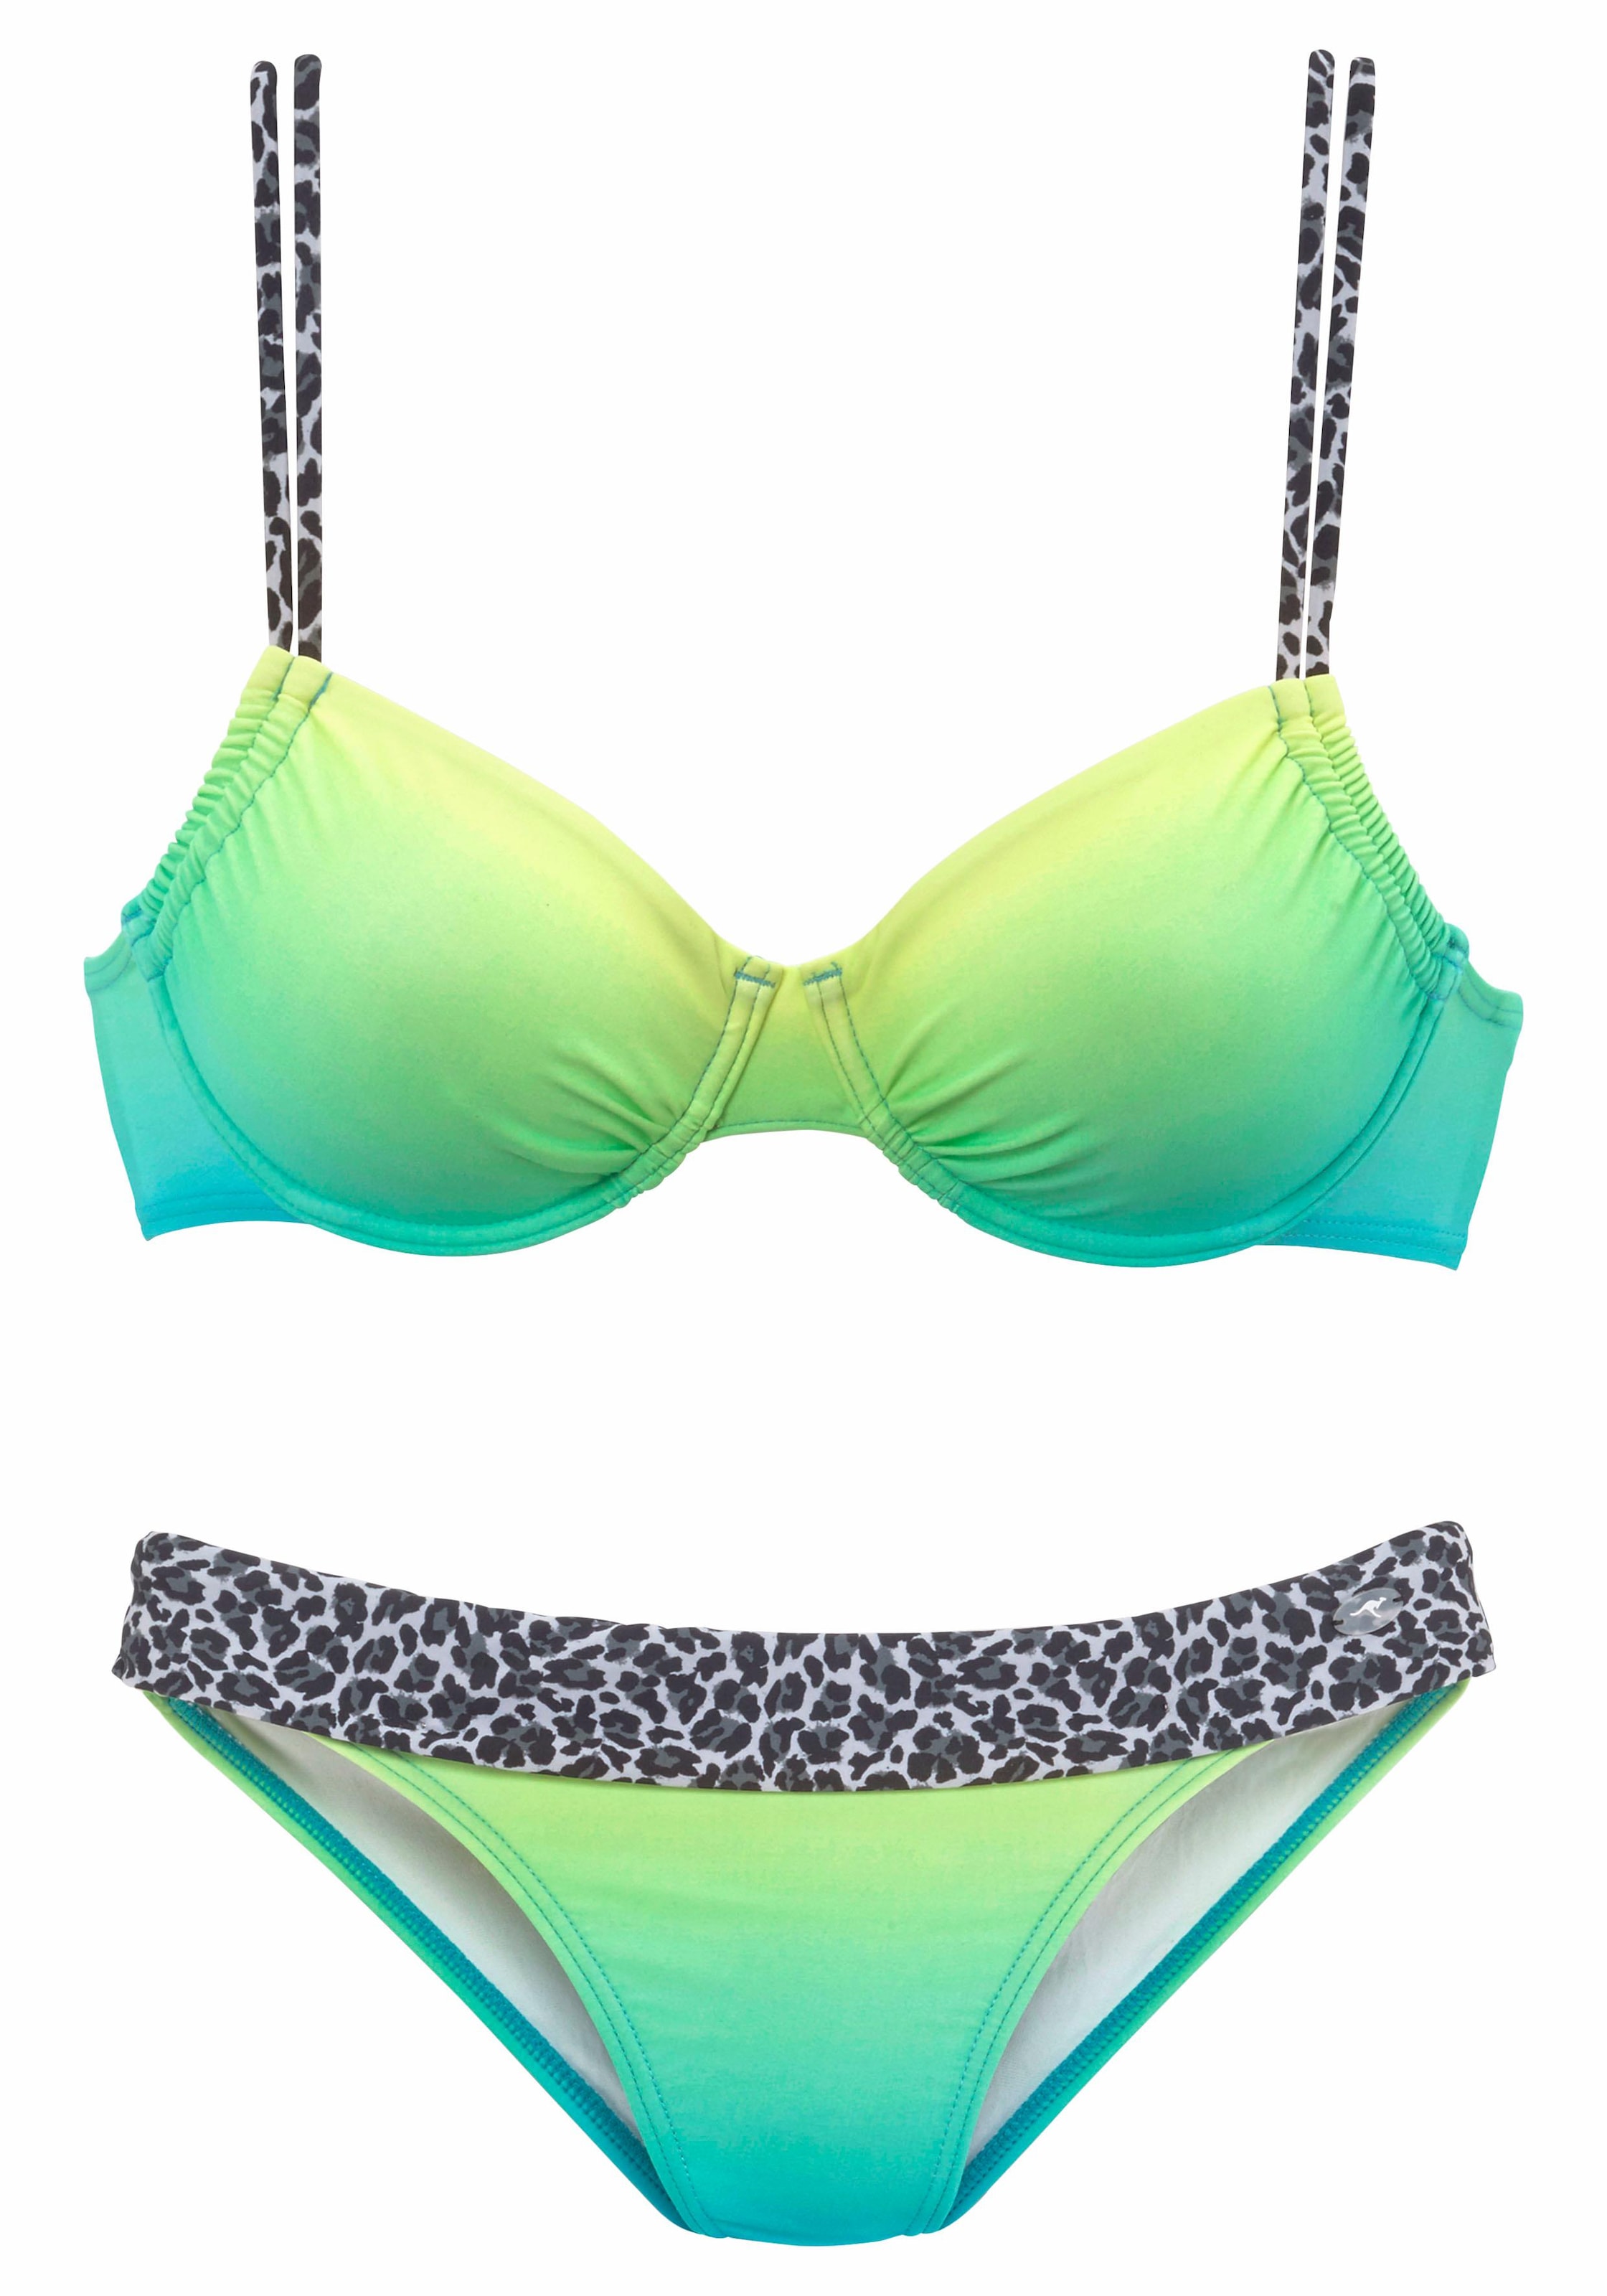 KangaROOS Bügel-Bikini, mit trendigen Details im Leoprint